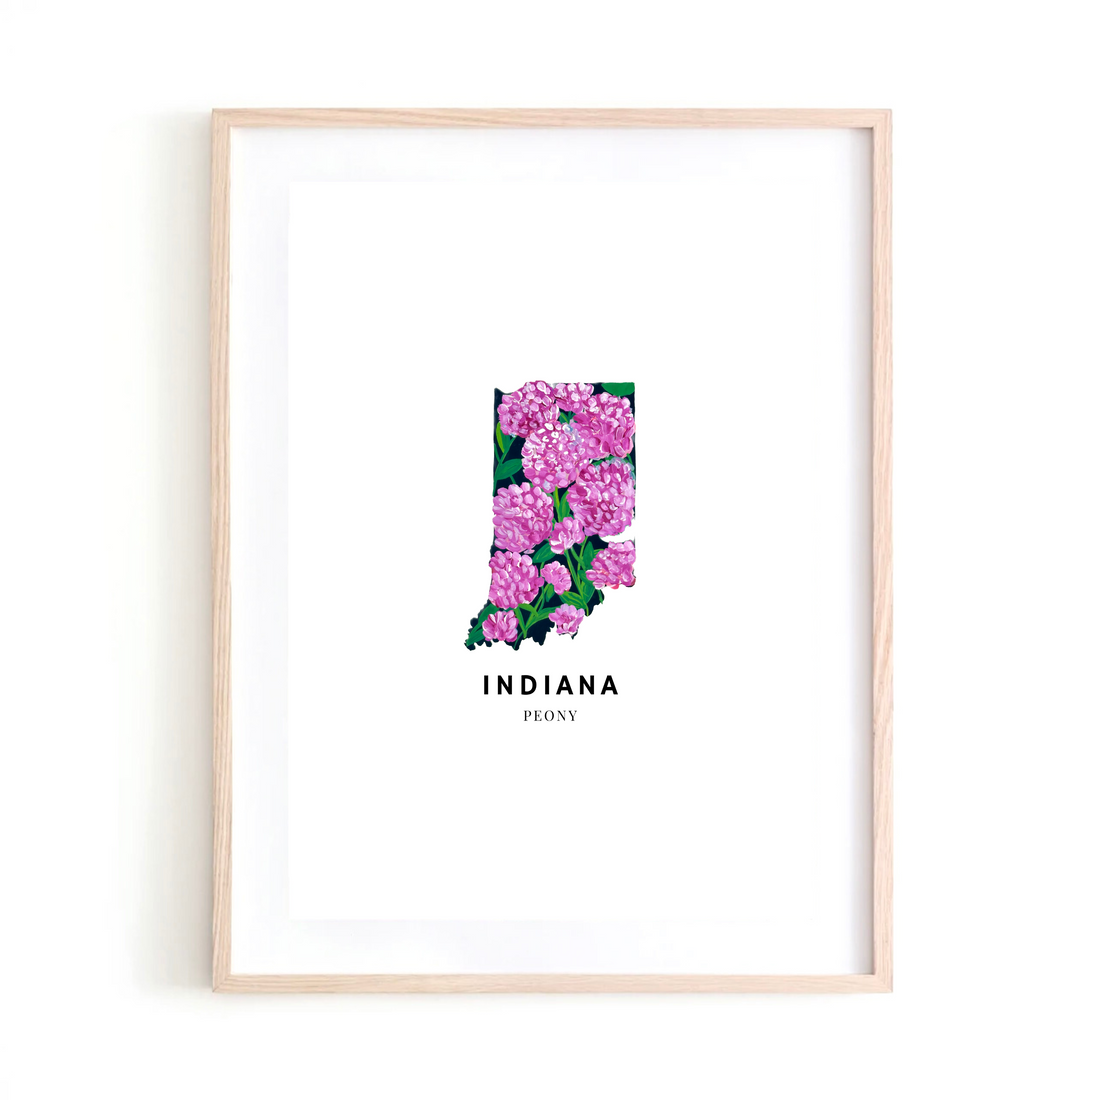 Indiana State Flower art print